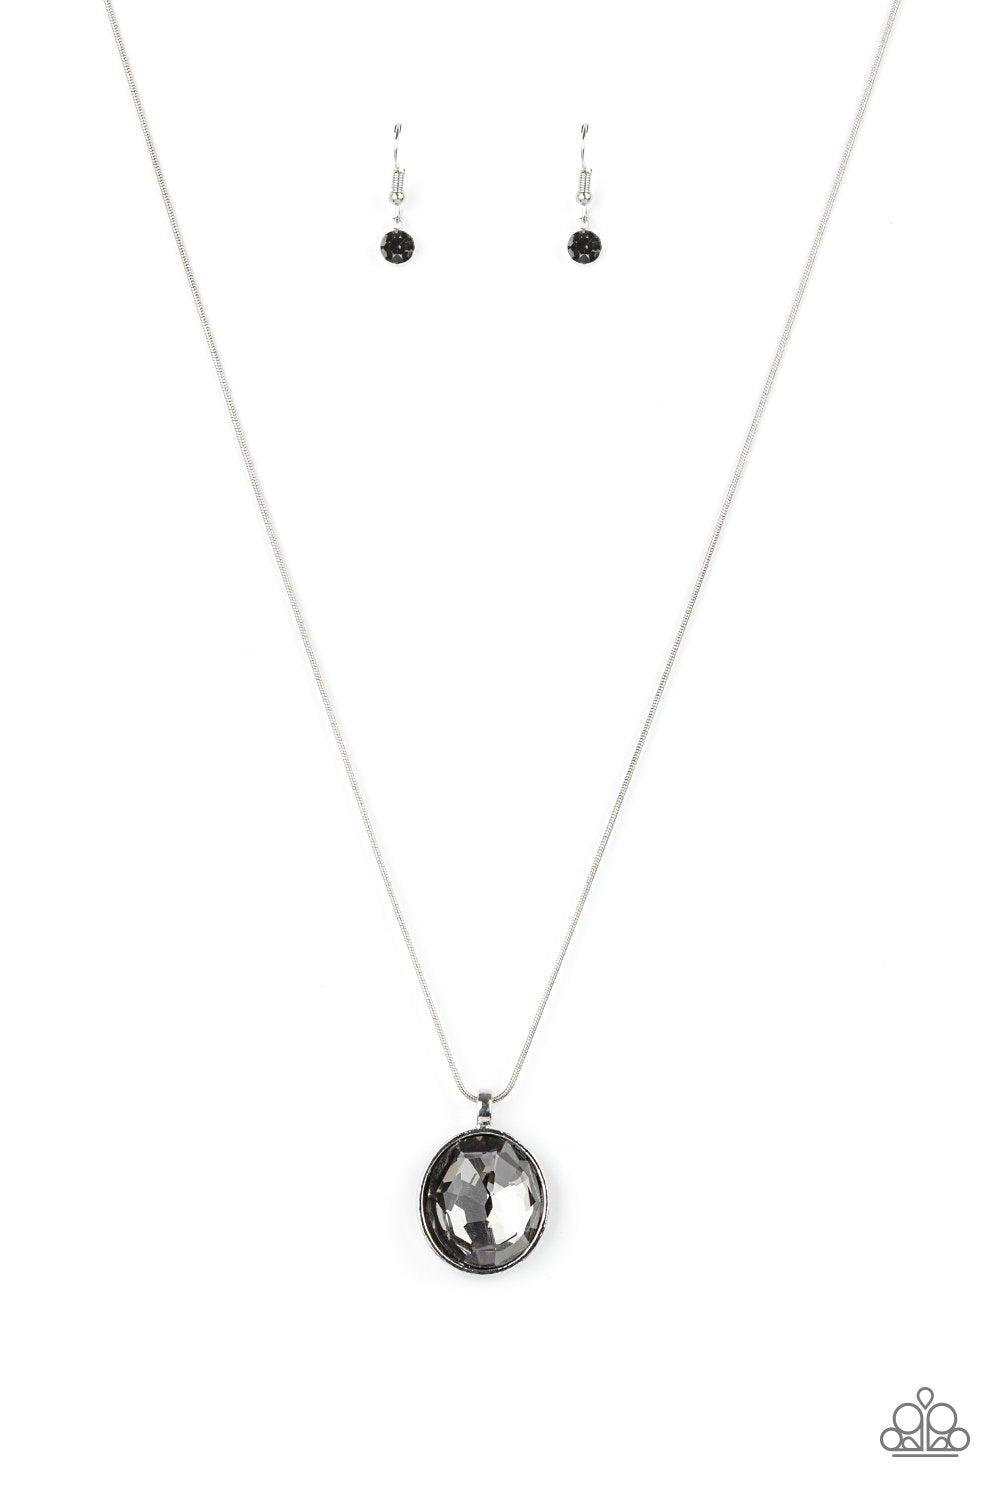 Instant Icon Smoky Silver Rhinestone Necklace - Paparazzi Accessories- lightbox - CarasShop.com - $5 Jewelry by Cara Jewels